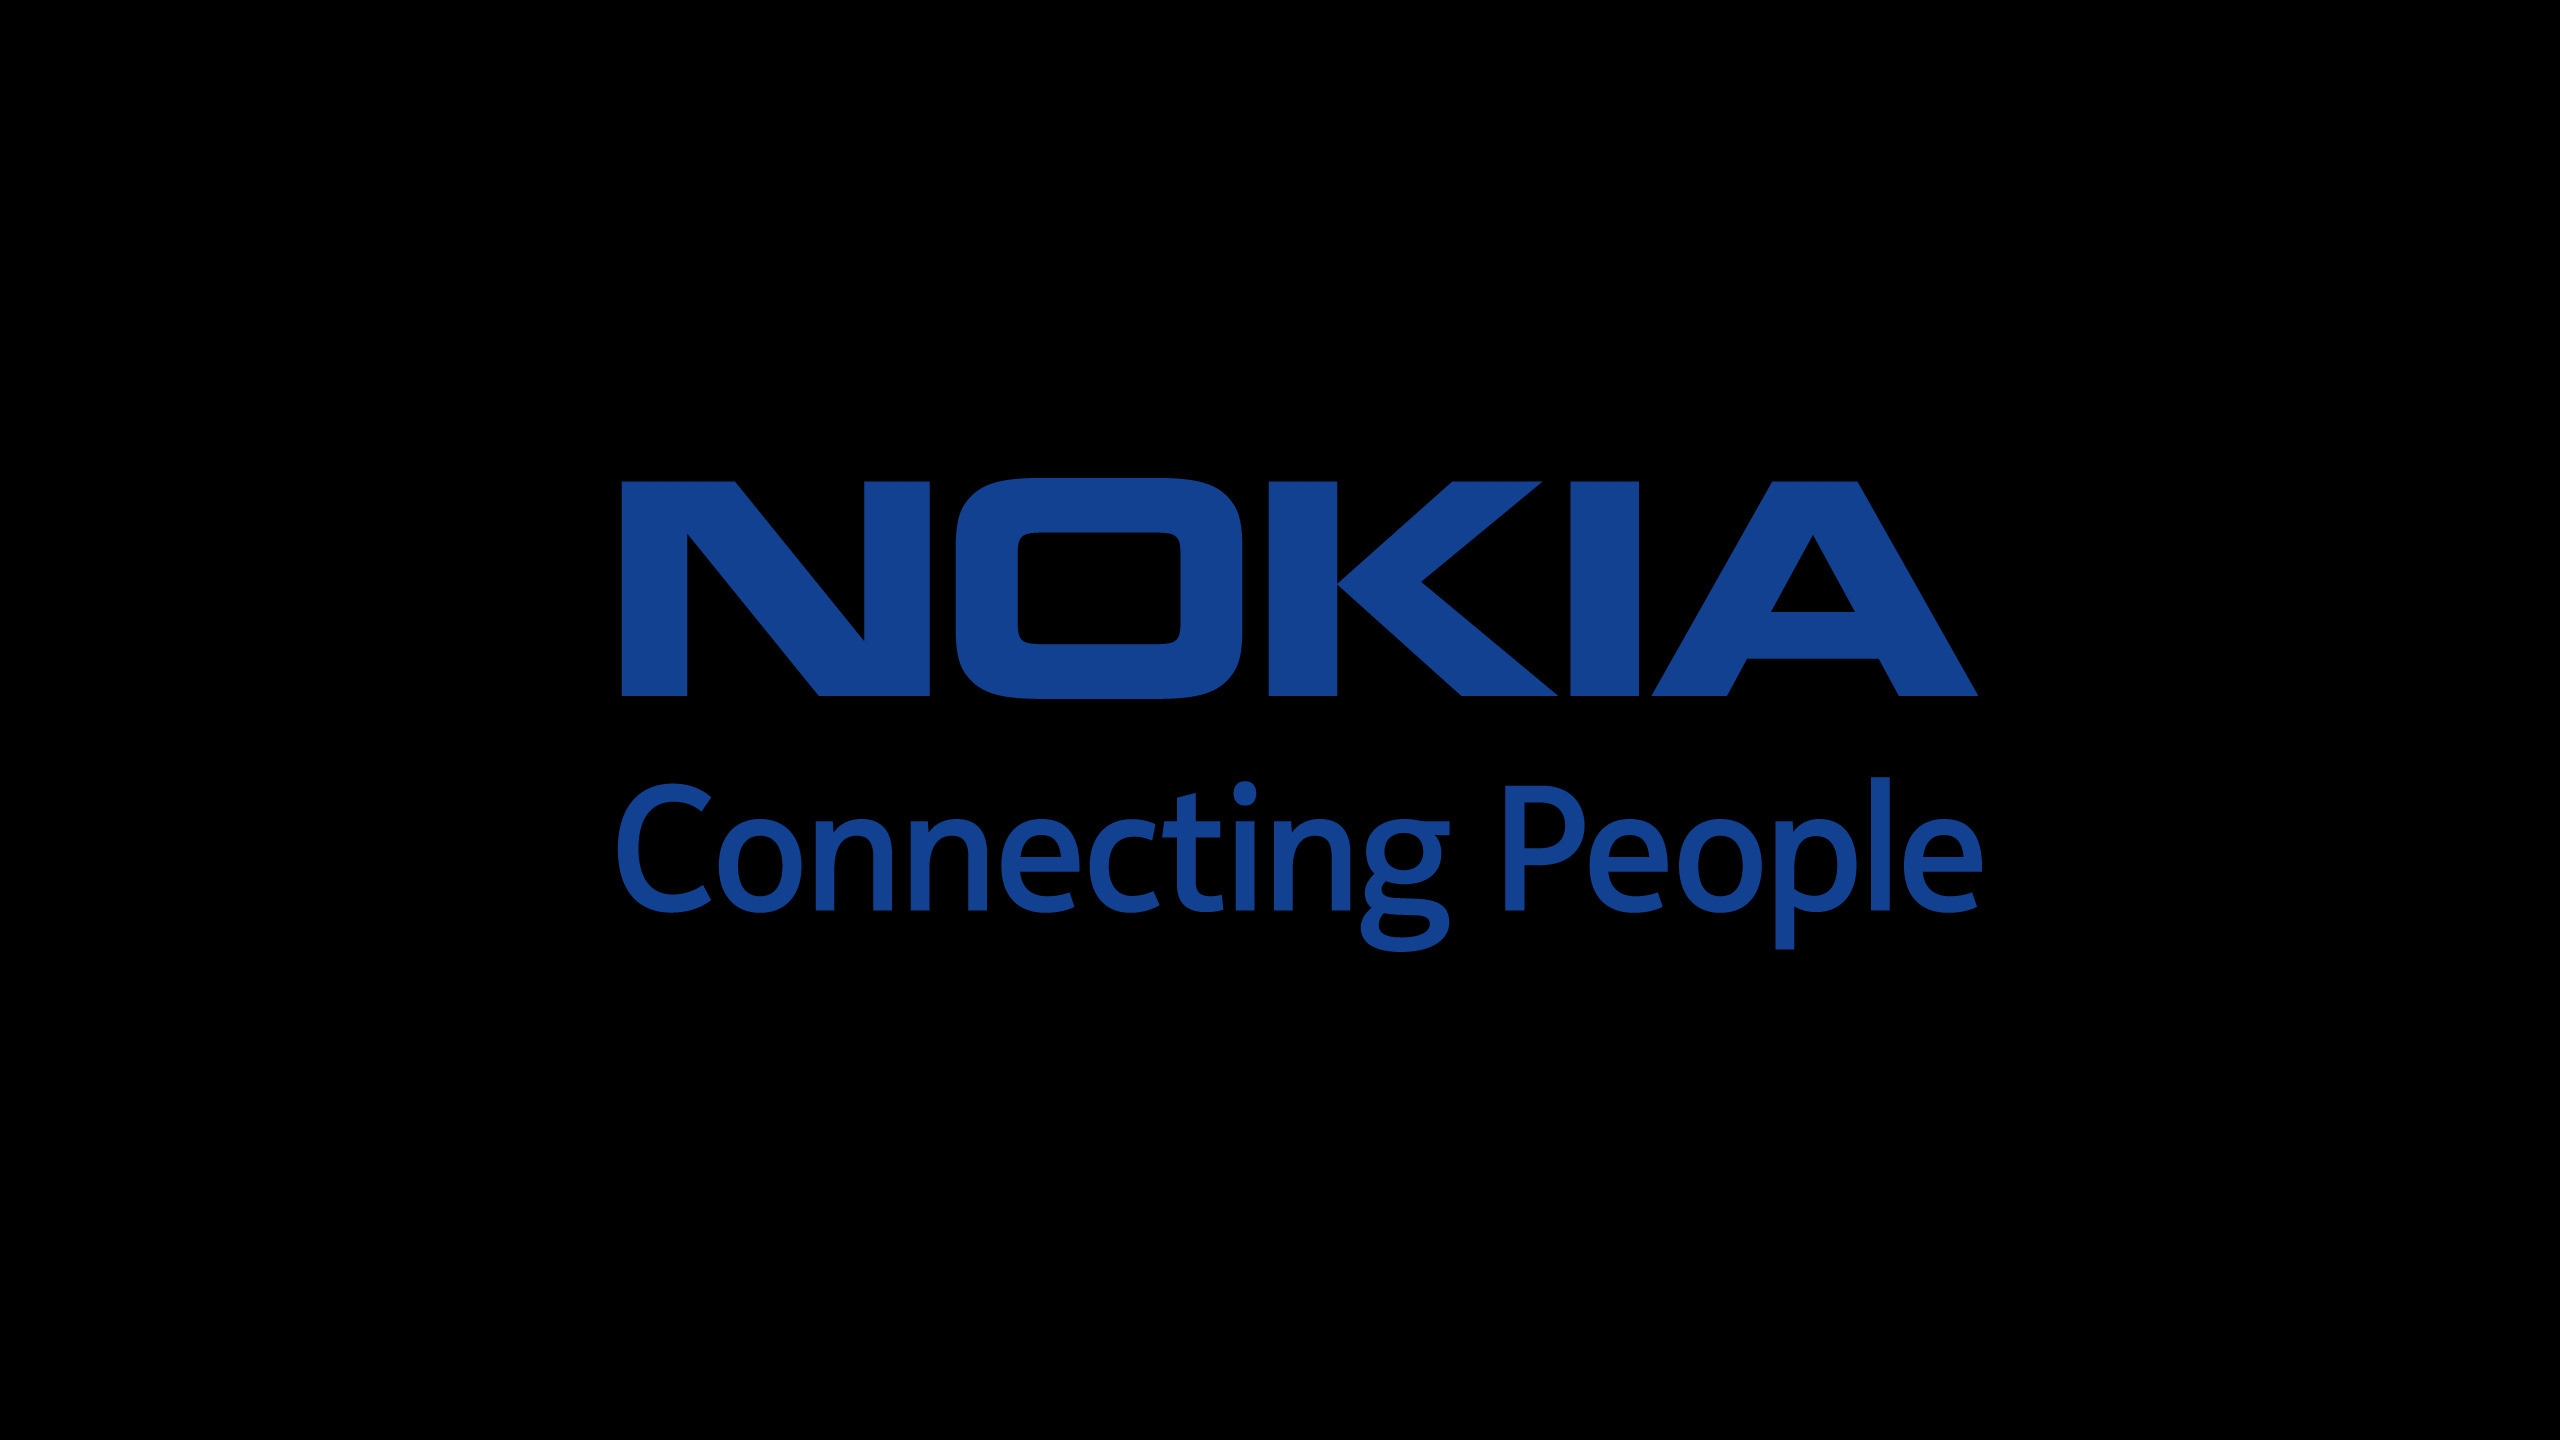 Nokia for 2560x1440 HDTV resolution